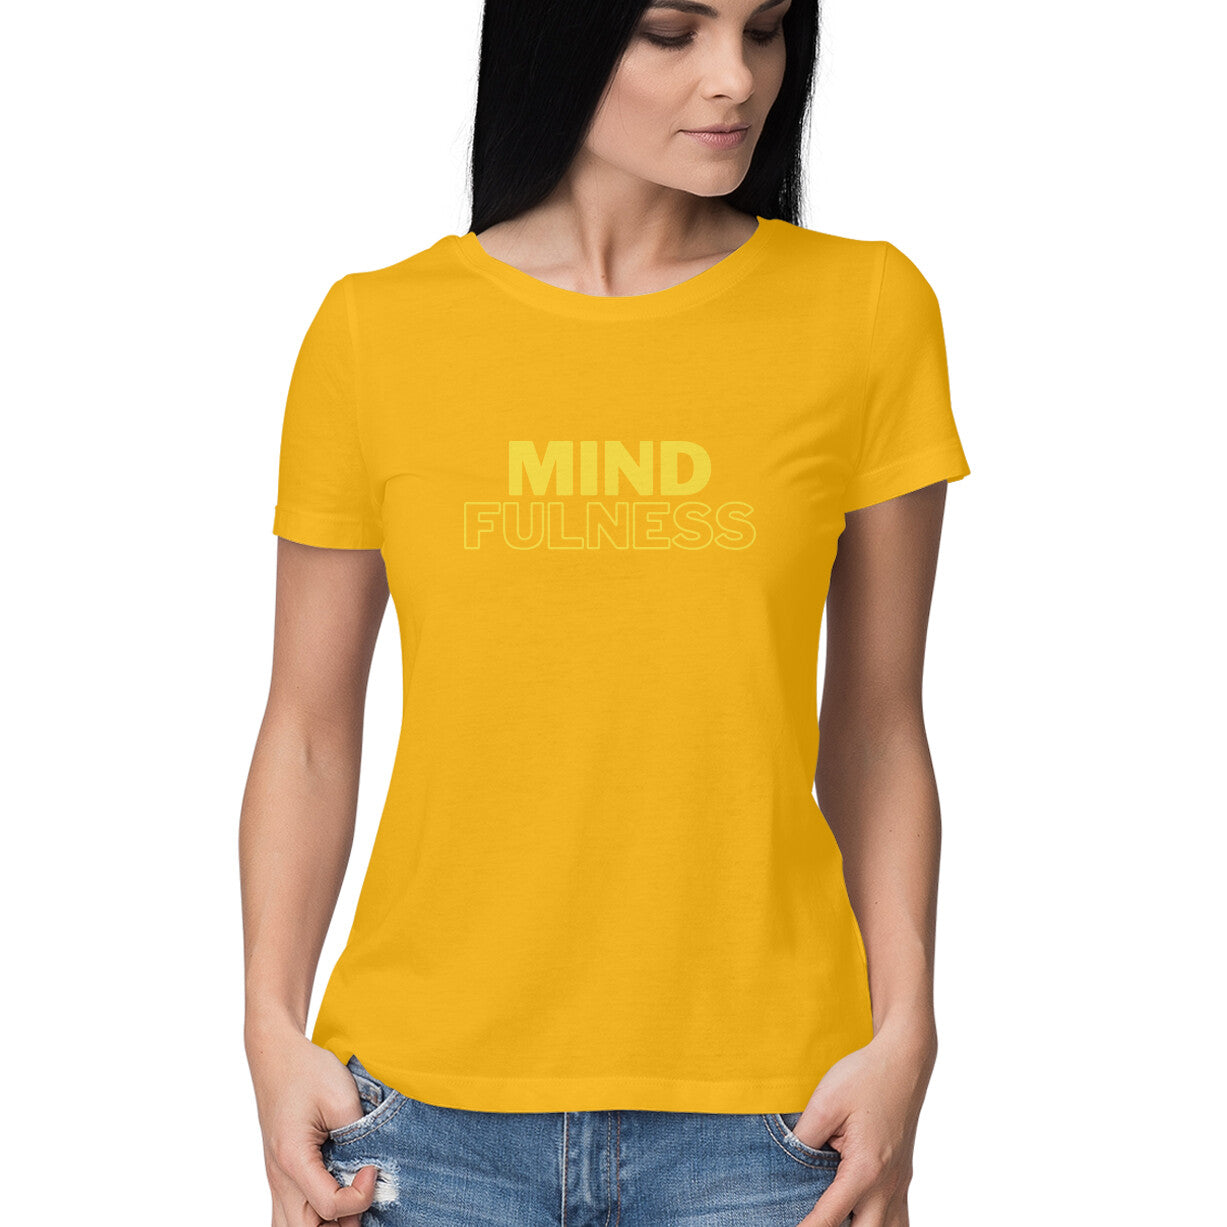 Mindfulness - Women Tshirt